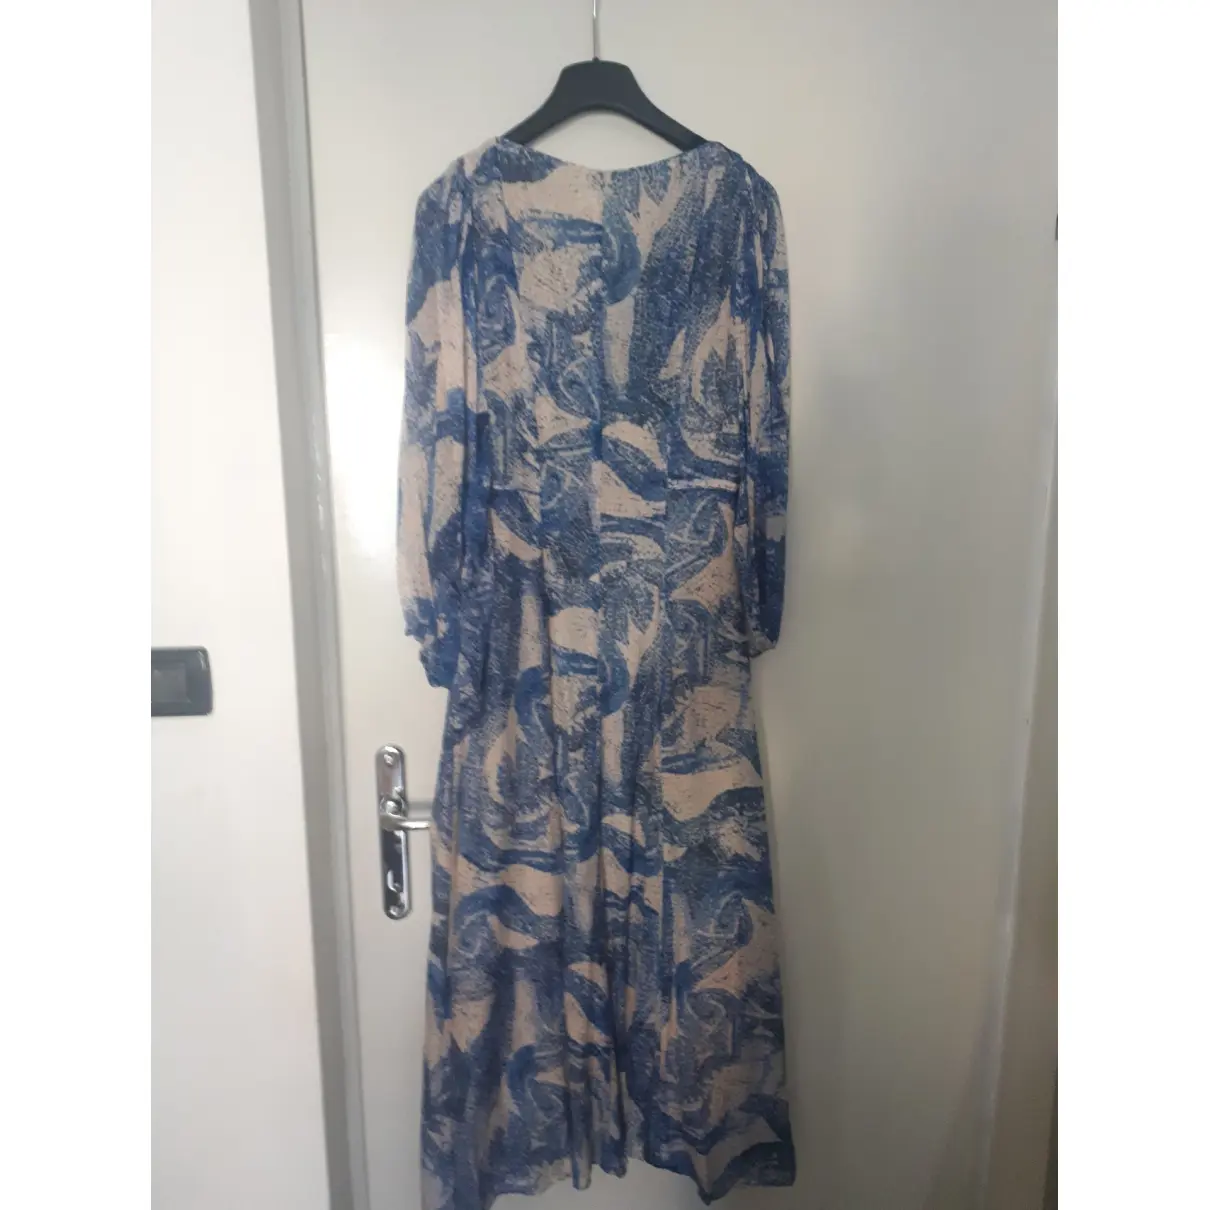 Buy Hm Conscious Exclusive Silk mid-length dress online